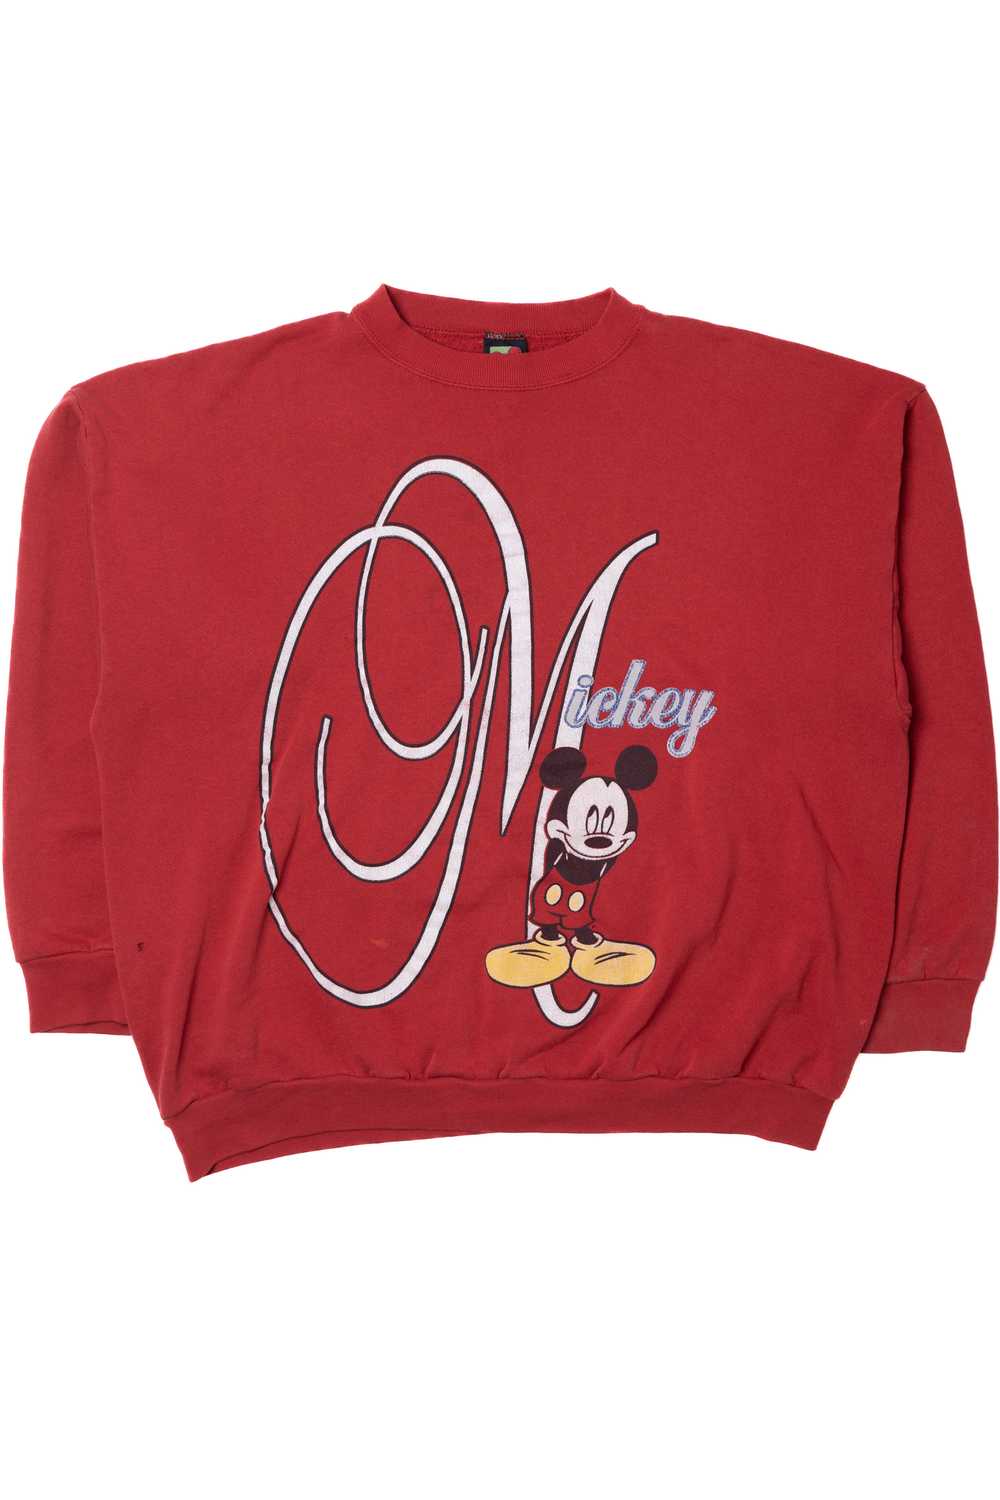 Vintage "Mickey" Mickey Mouse Sweatshirt 9894 - image 1